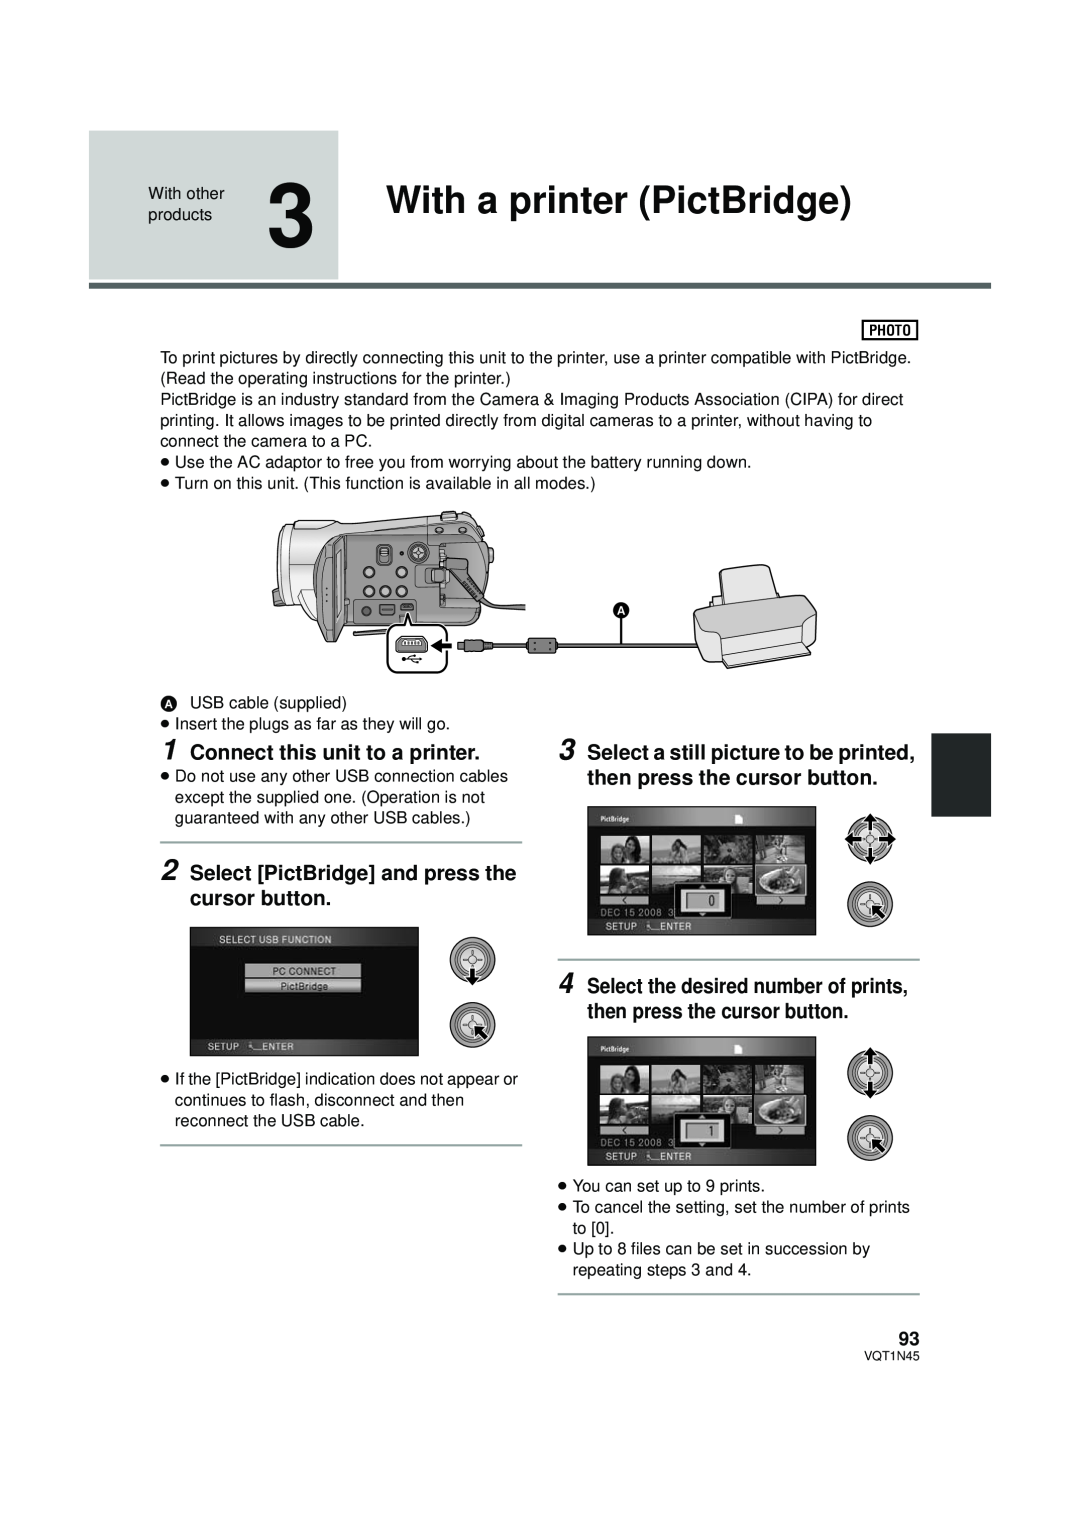 Panasonic HDC-SD9PC manual With a printer PictBridge, Connect this unit to a printer 